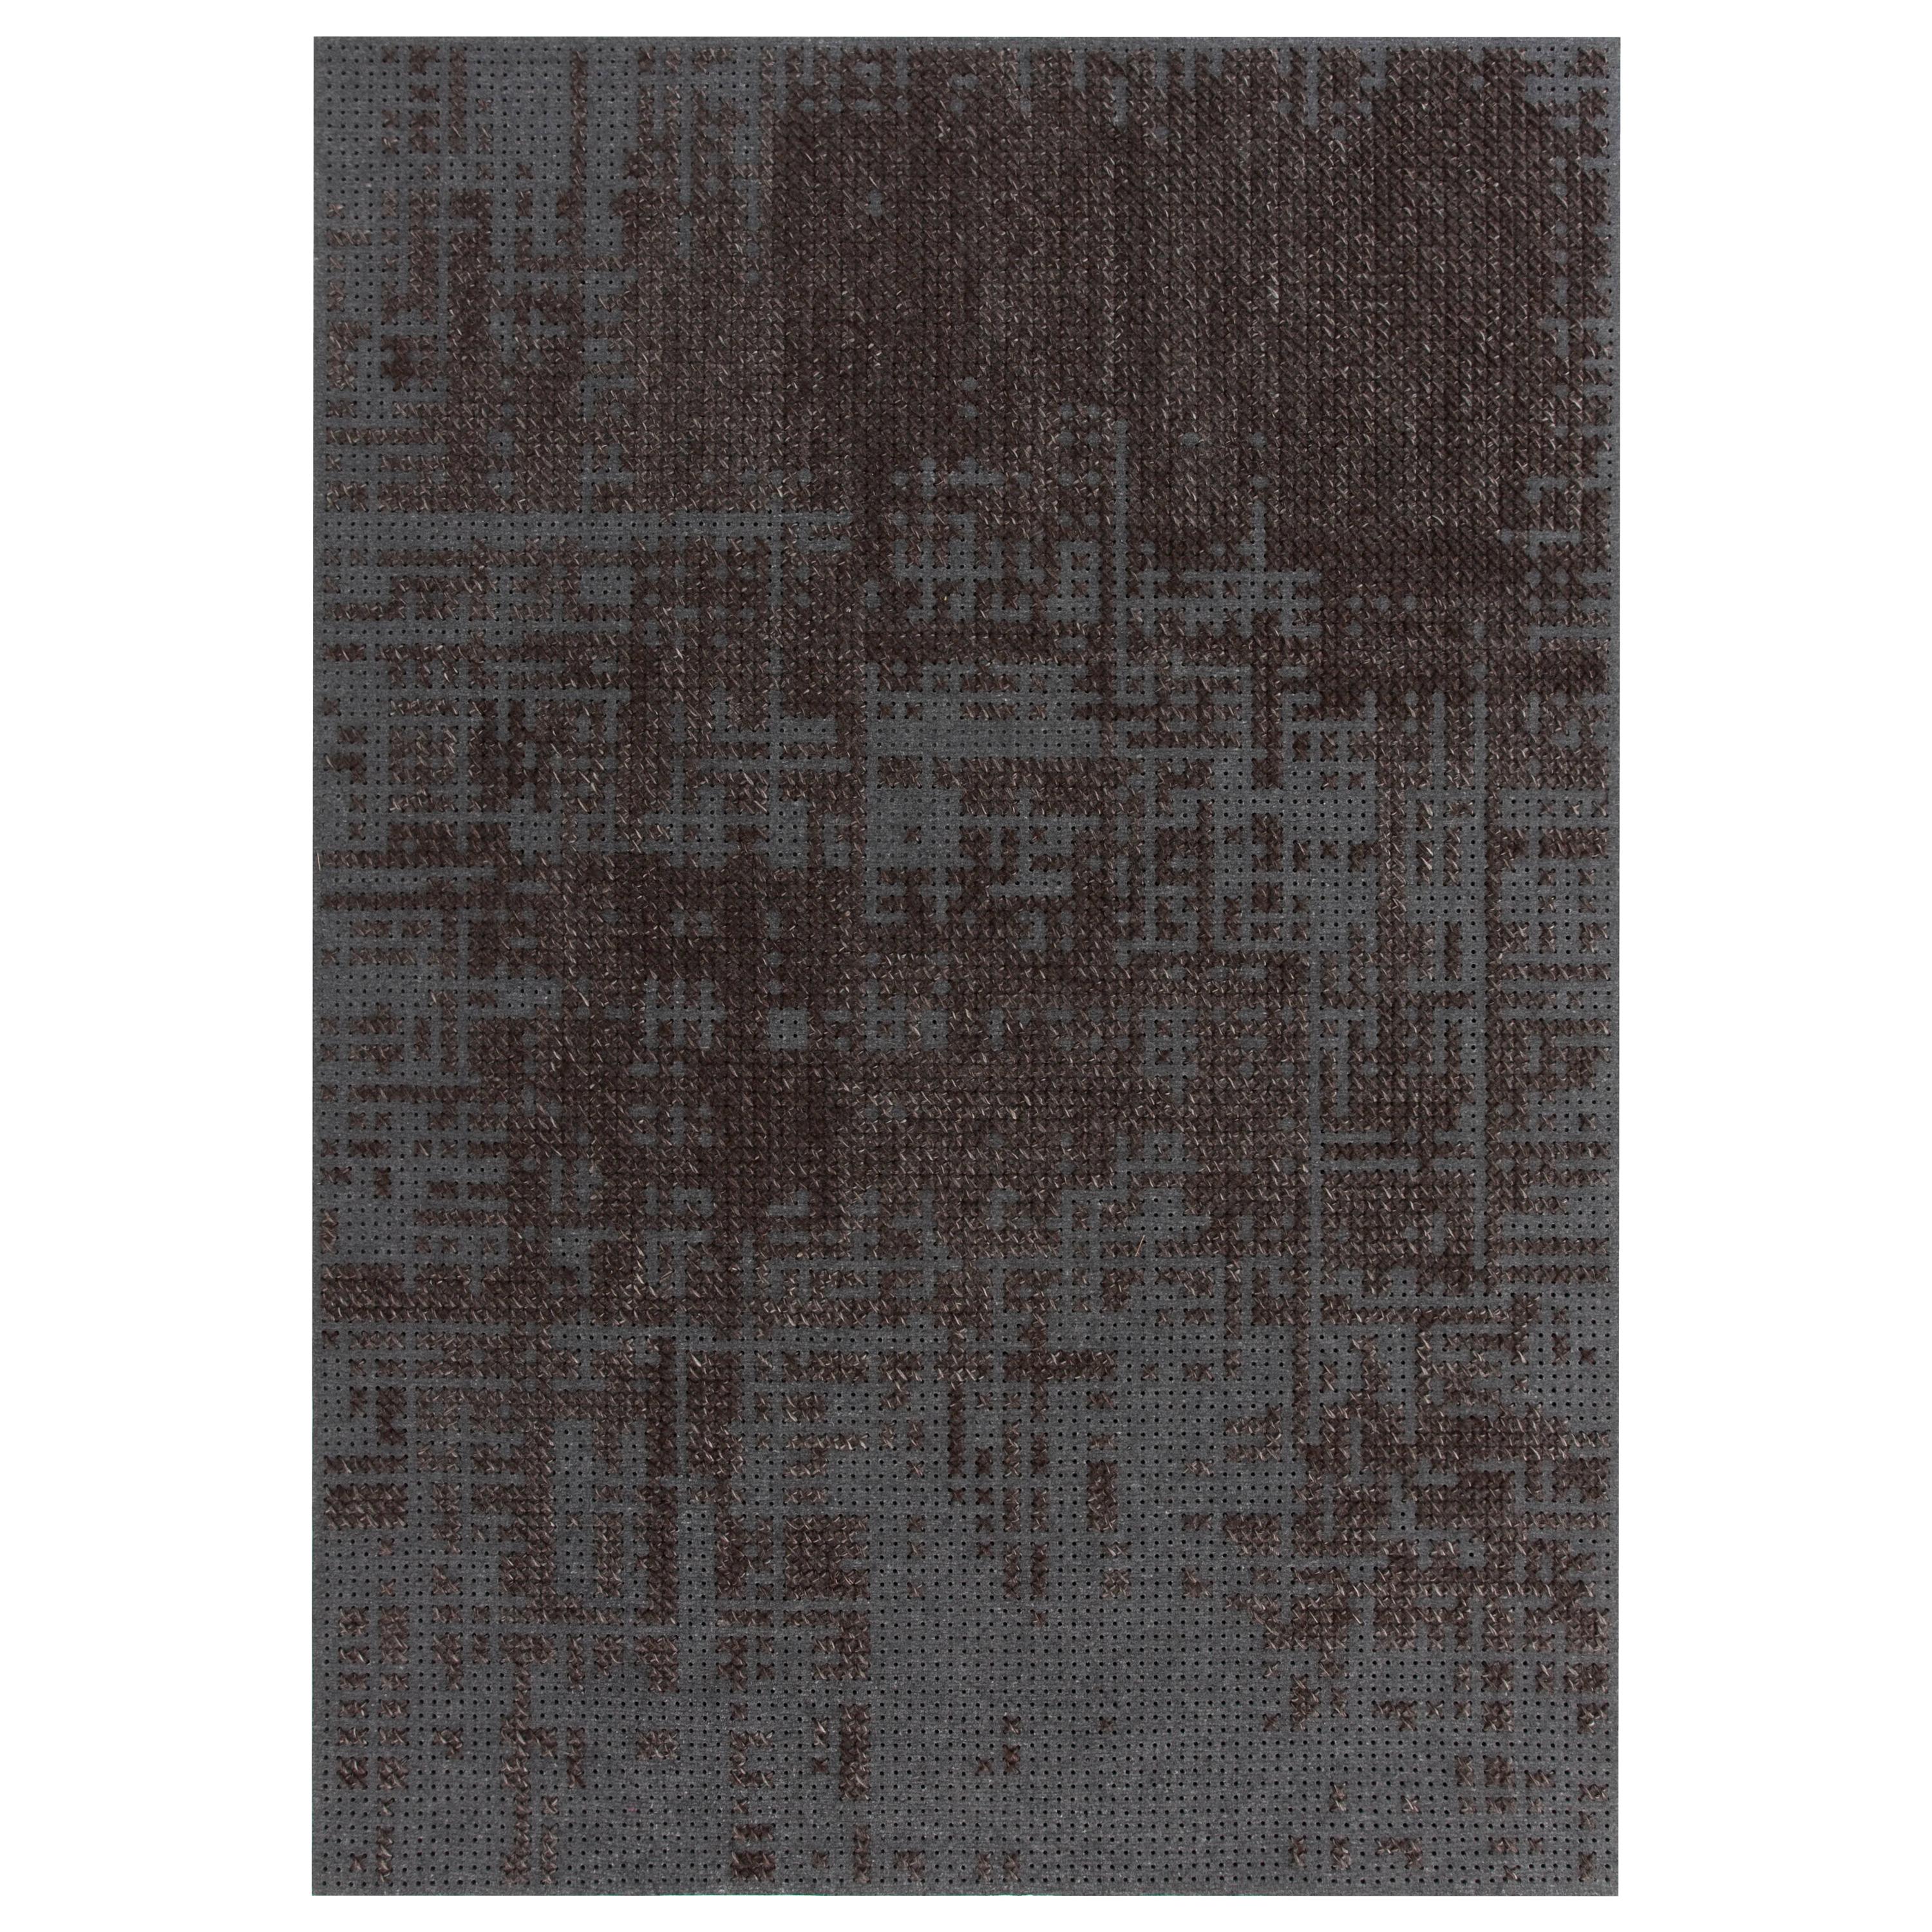 For Sale:  (Gray) GAN Canevas Medium Abstract Rug by Charlotte Lancelot